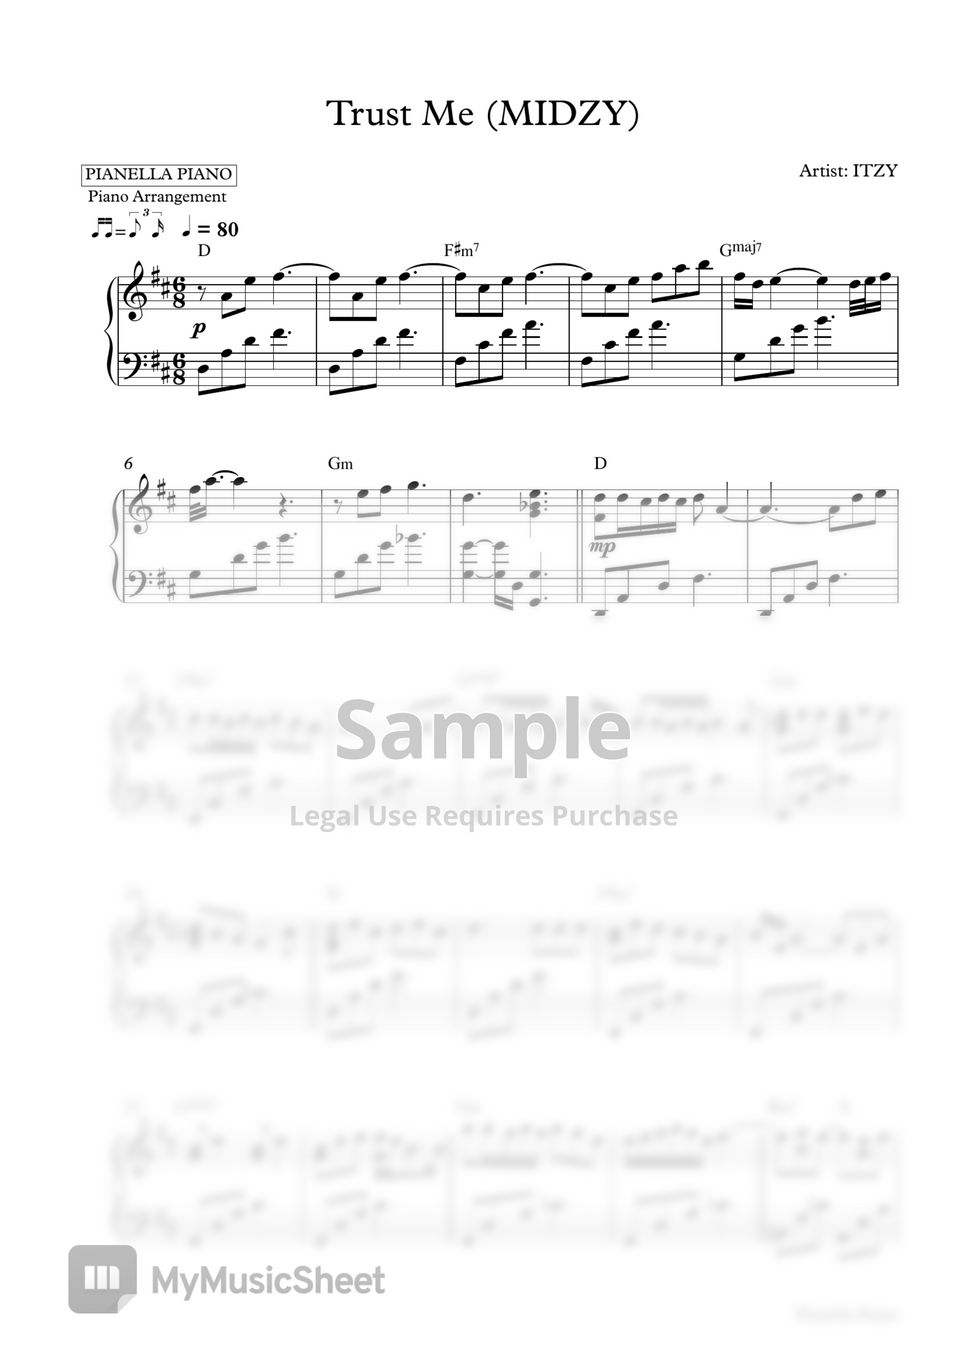 ITZY - Trust Me (MIDZY) (Piano Sheet) by Pianella Piano